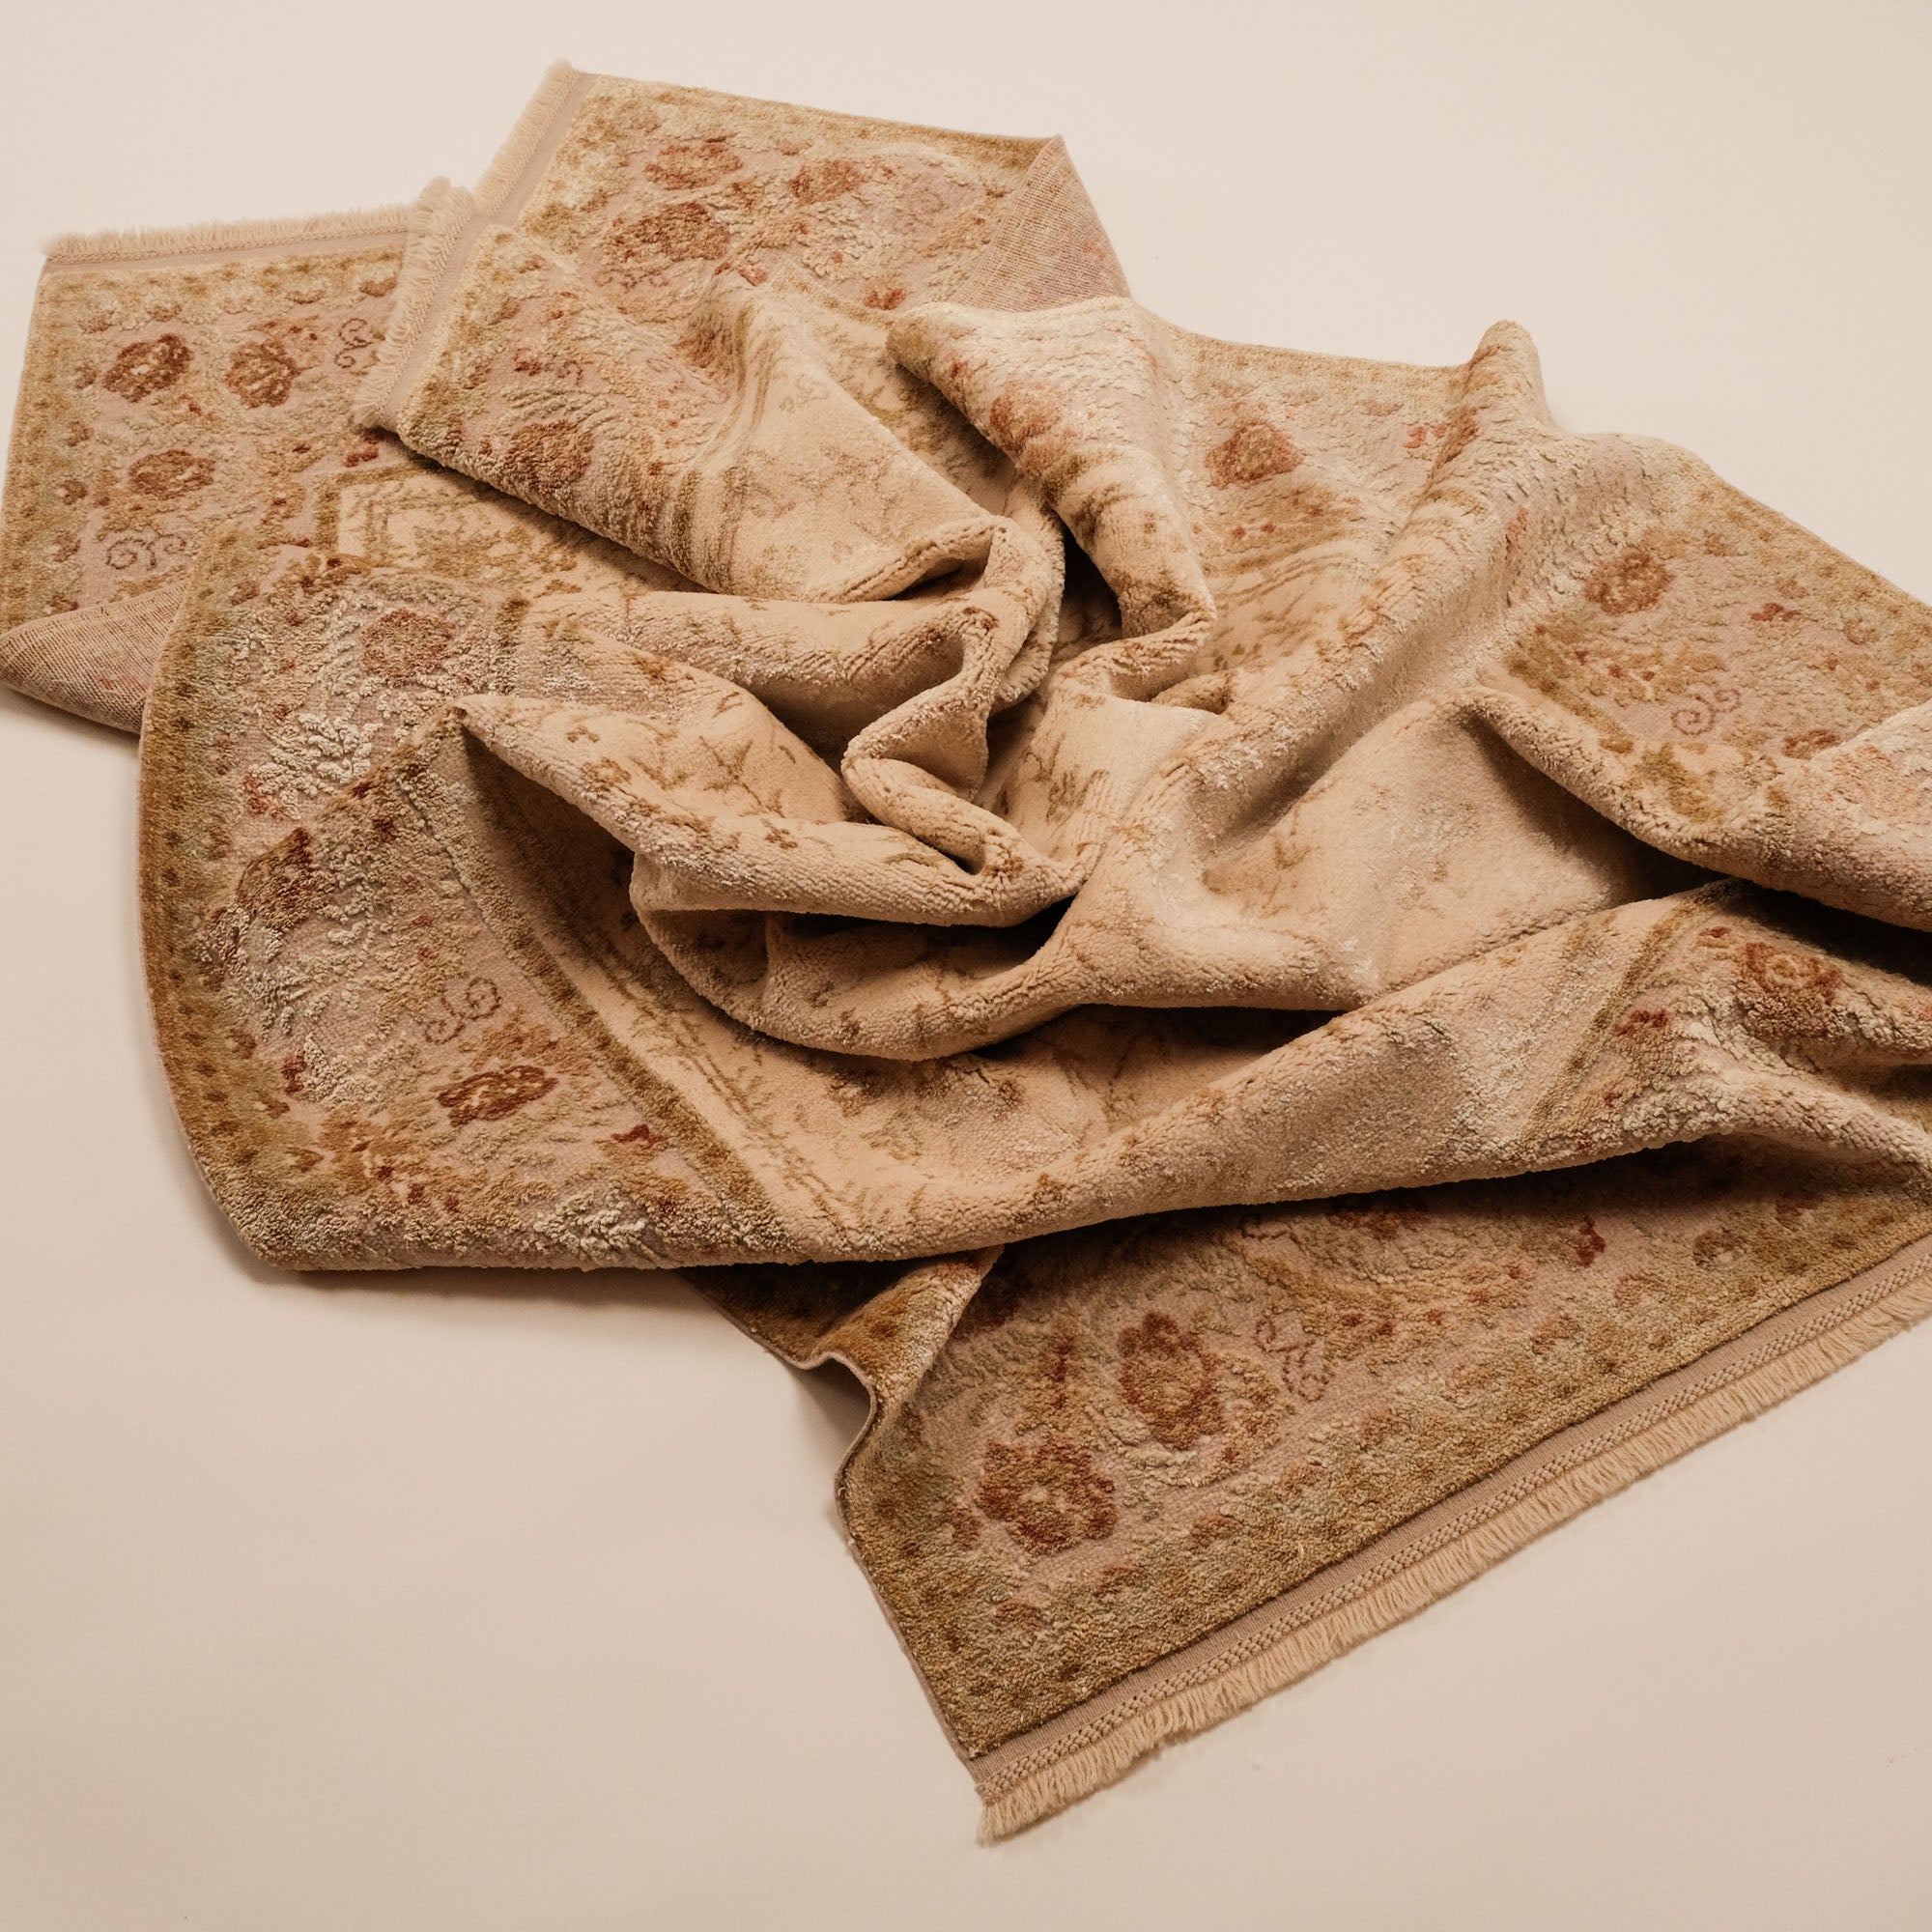 Ottoman Series Floral Design Hand Woven Carpet